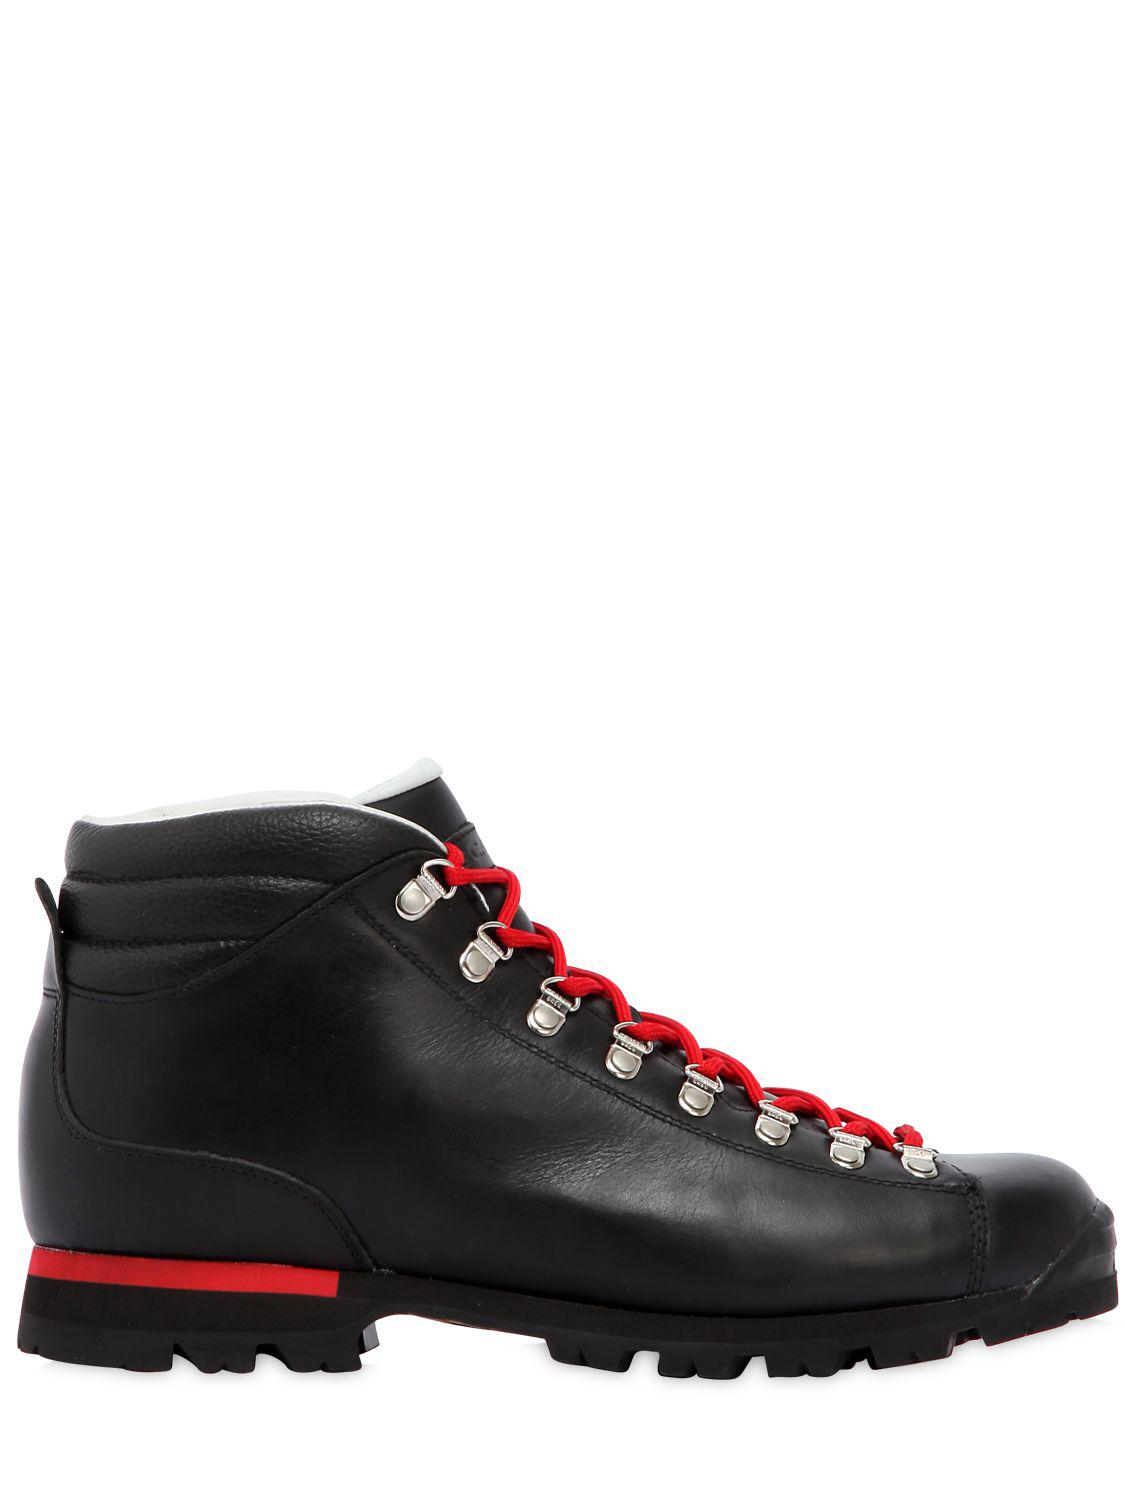 Lyst - Scarpa Primitive Leather Vibram Boots in Black for Men